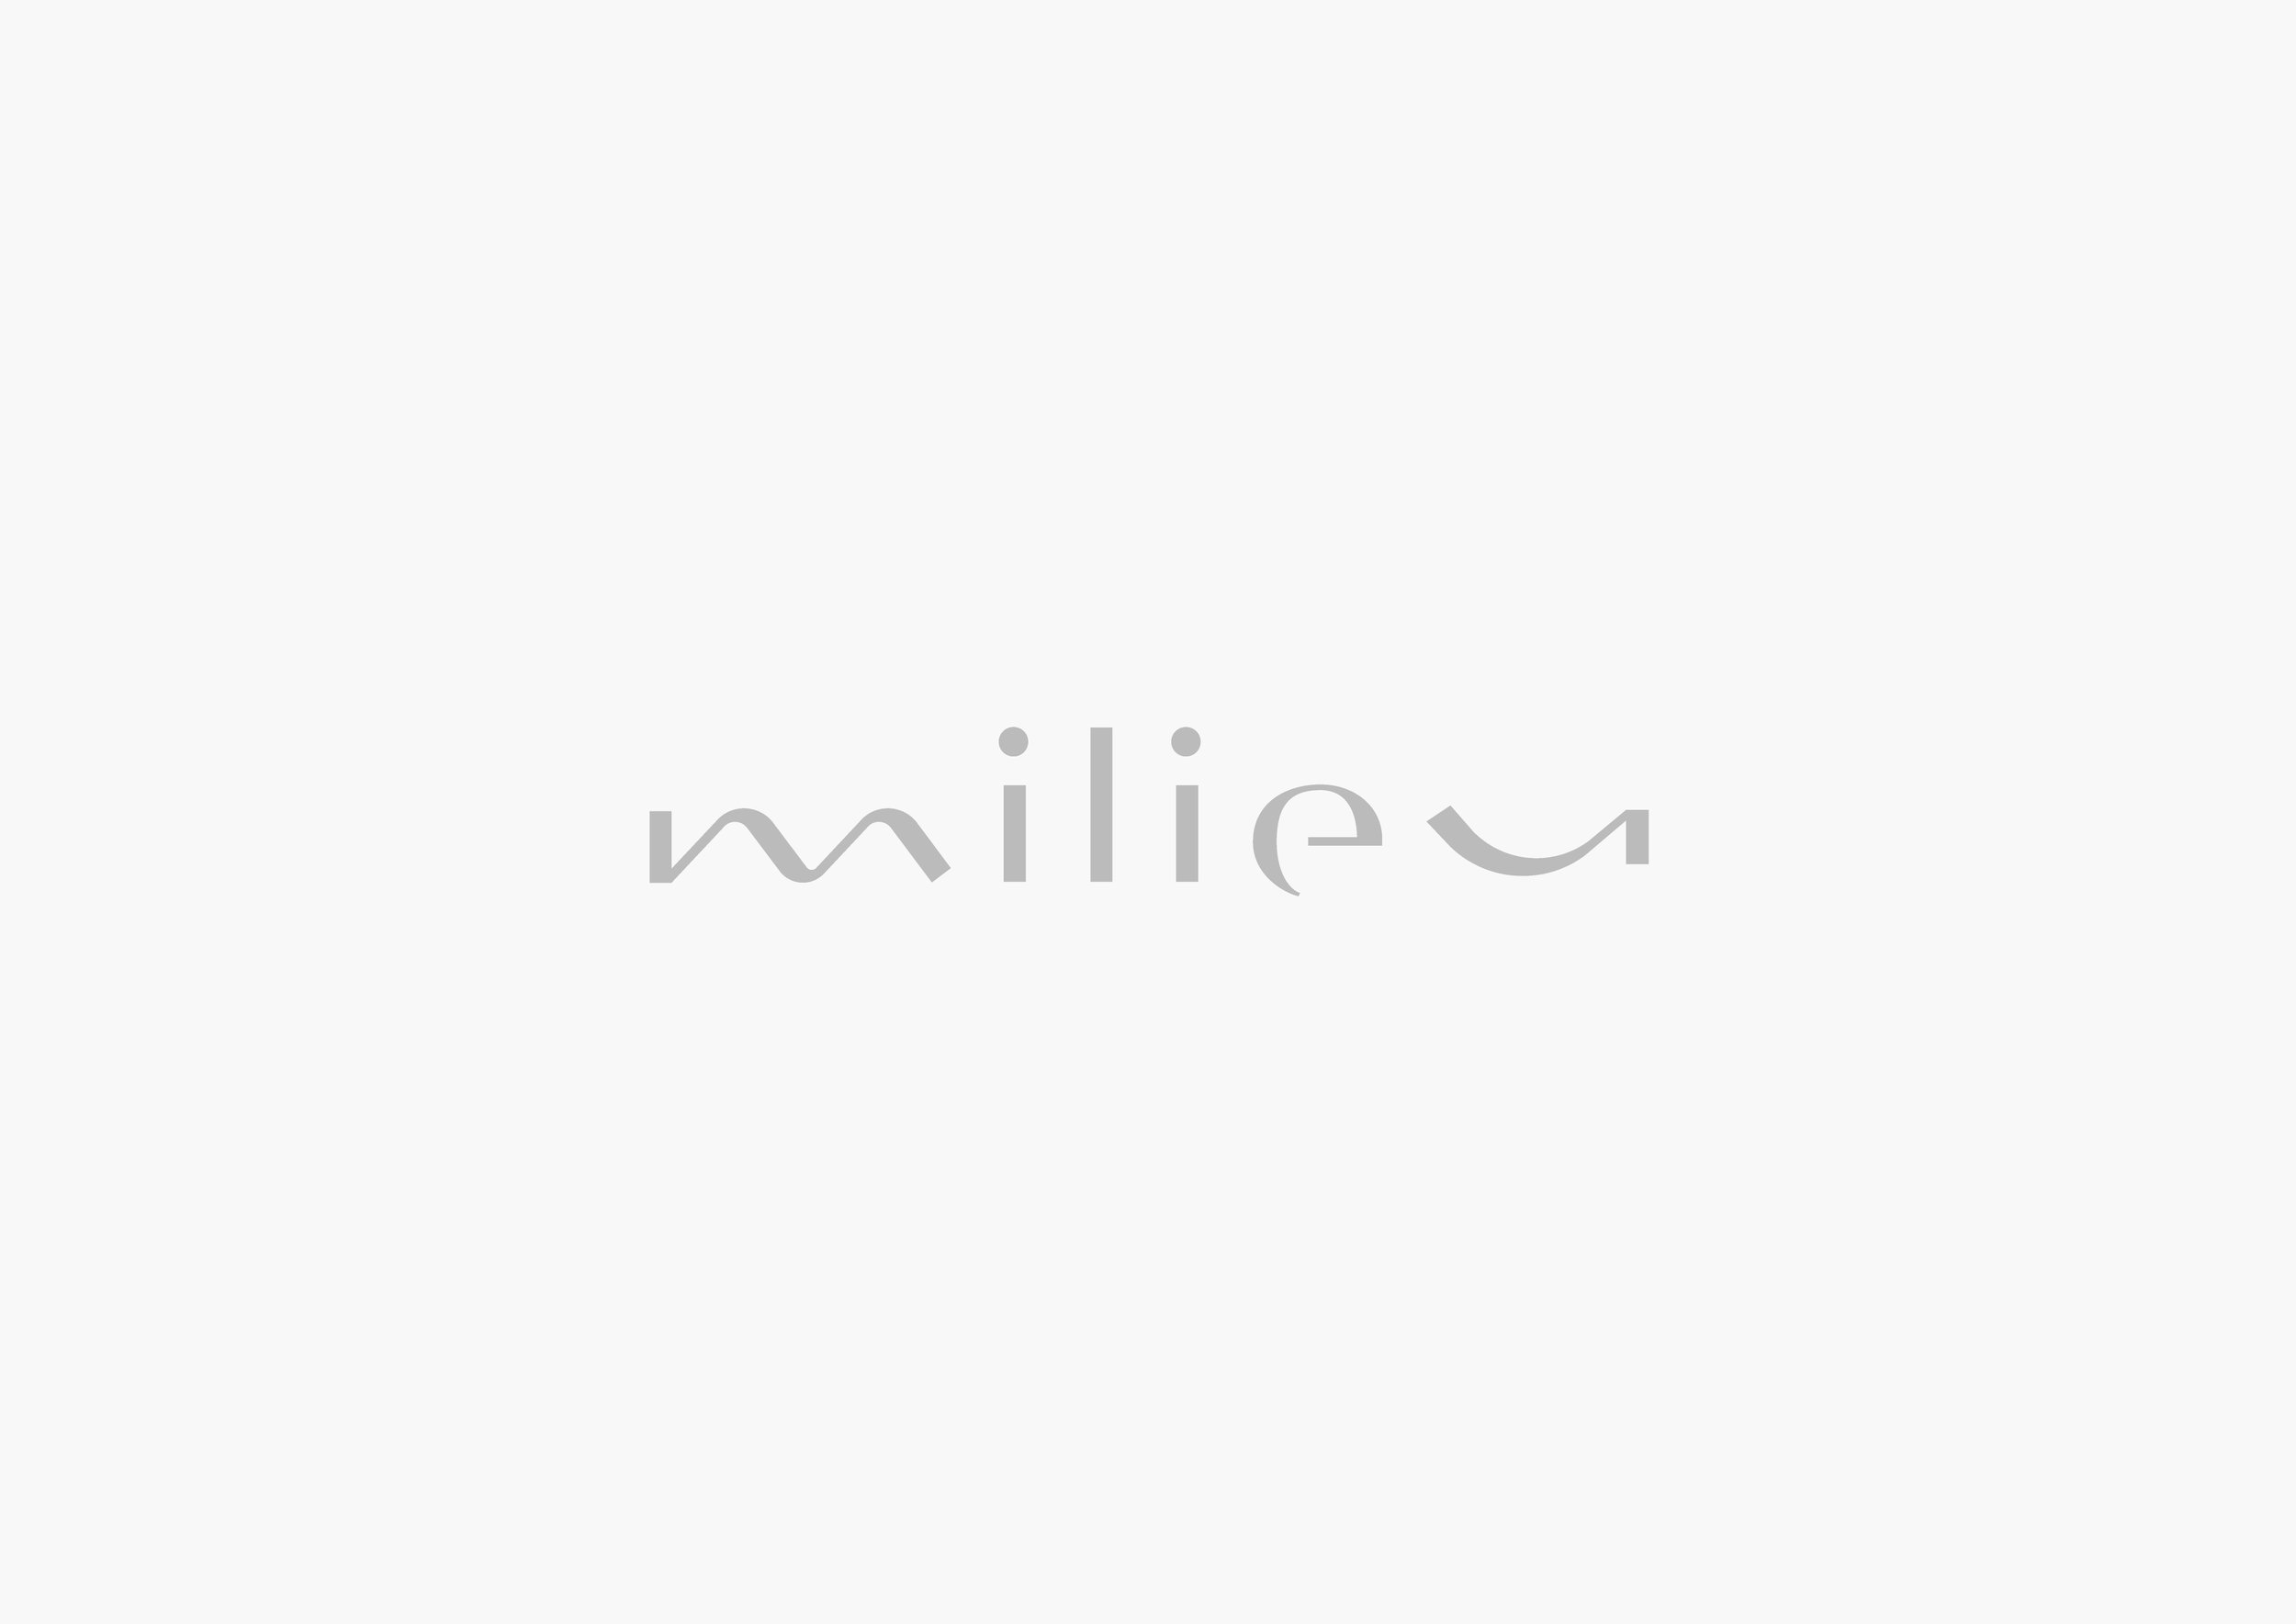 milieu_logo_.jpg